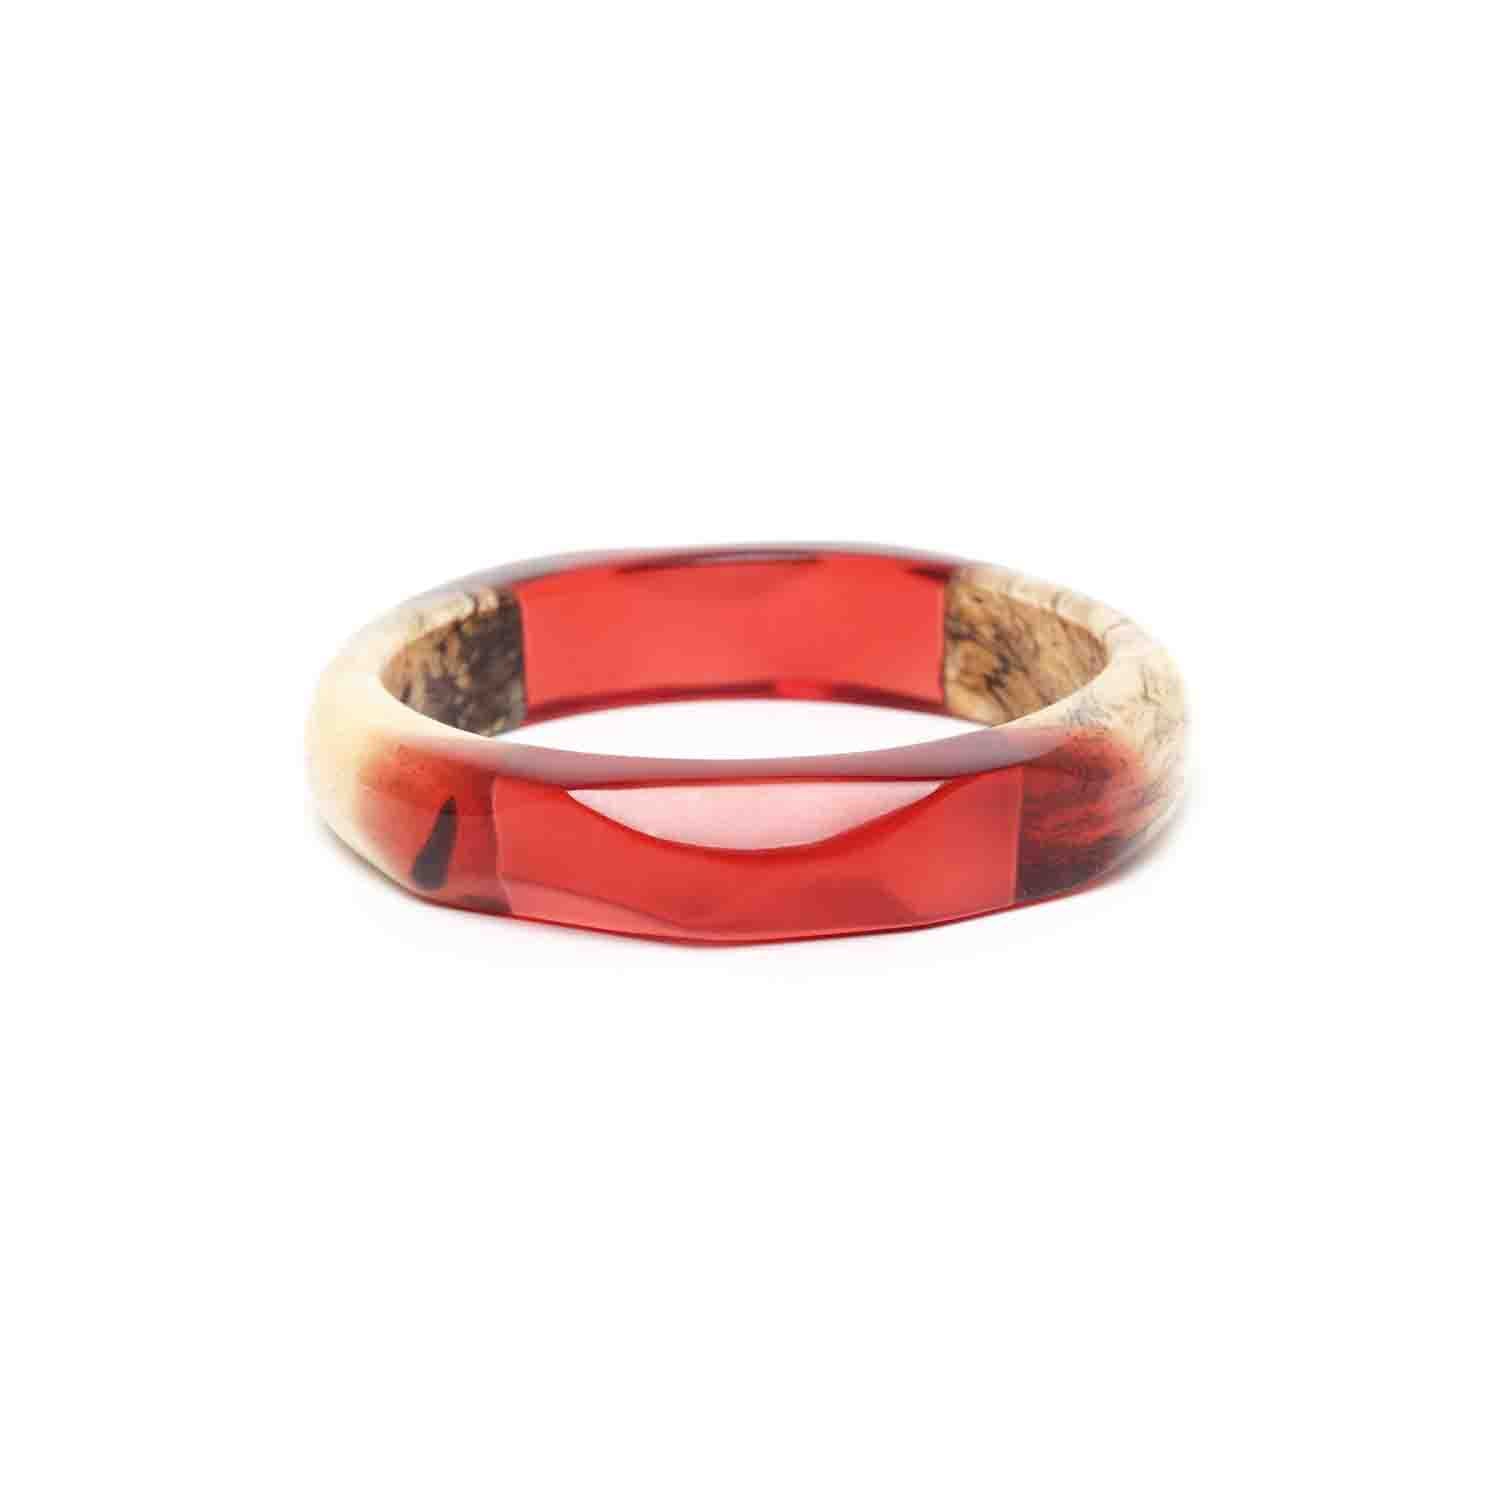 Nature Bijoux Bangle Bracelet / Tamarind, Eco Resin / Red, Beige / Natural Materials / Sweet Amber